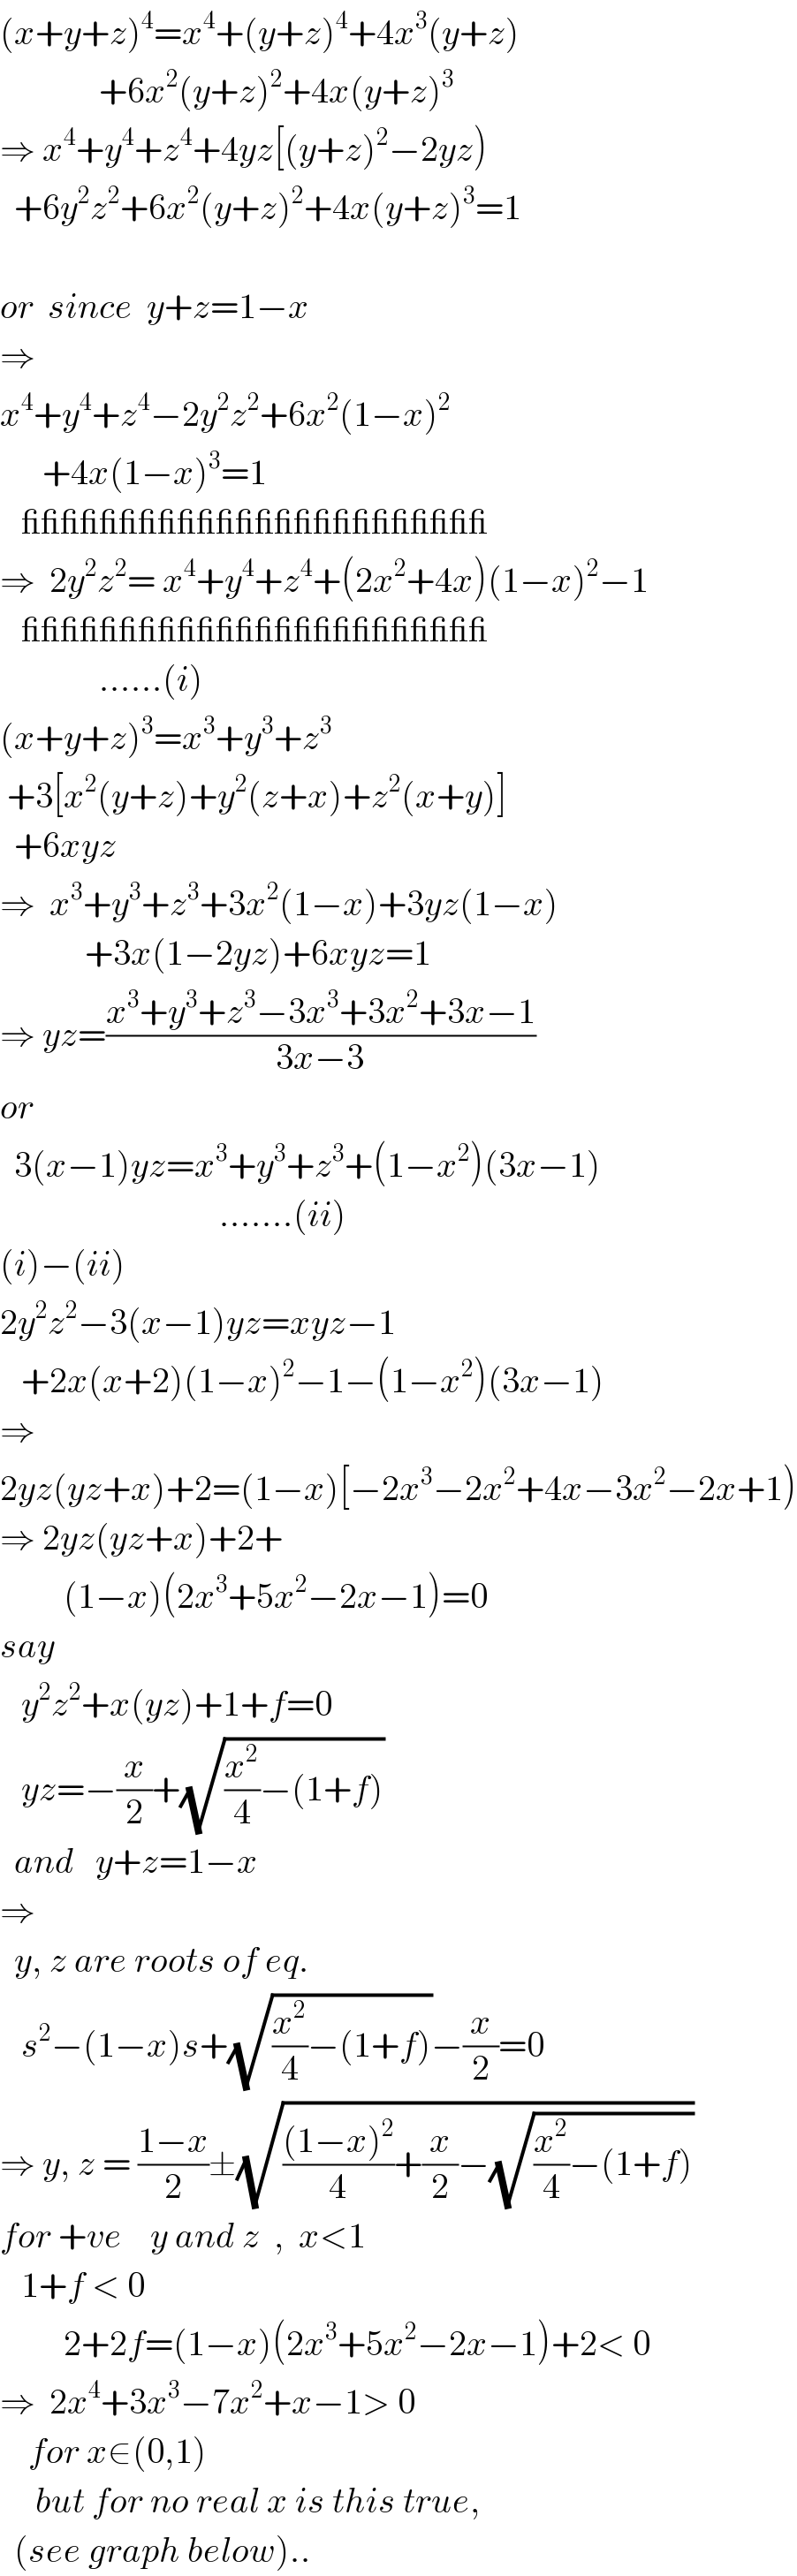 Tinkutara Equation Editor Math Forum Question 641